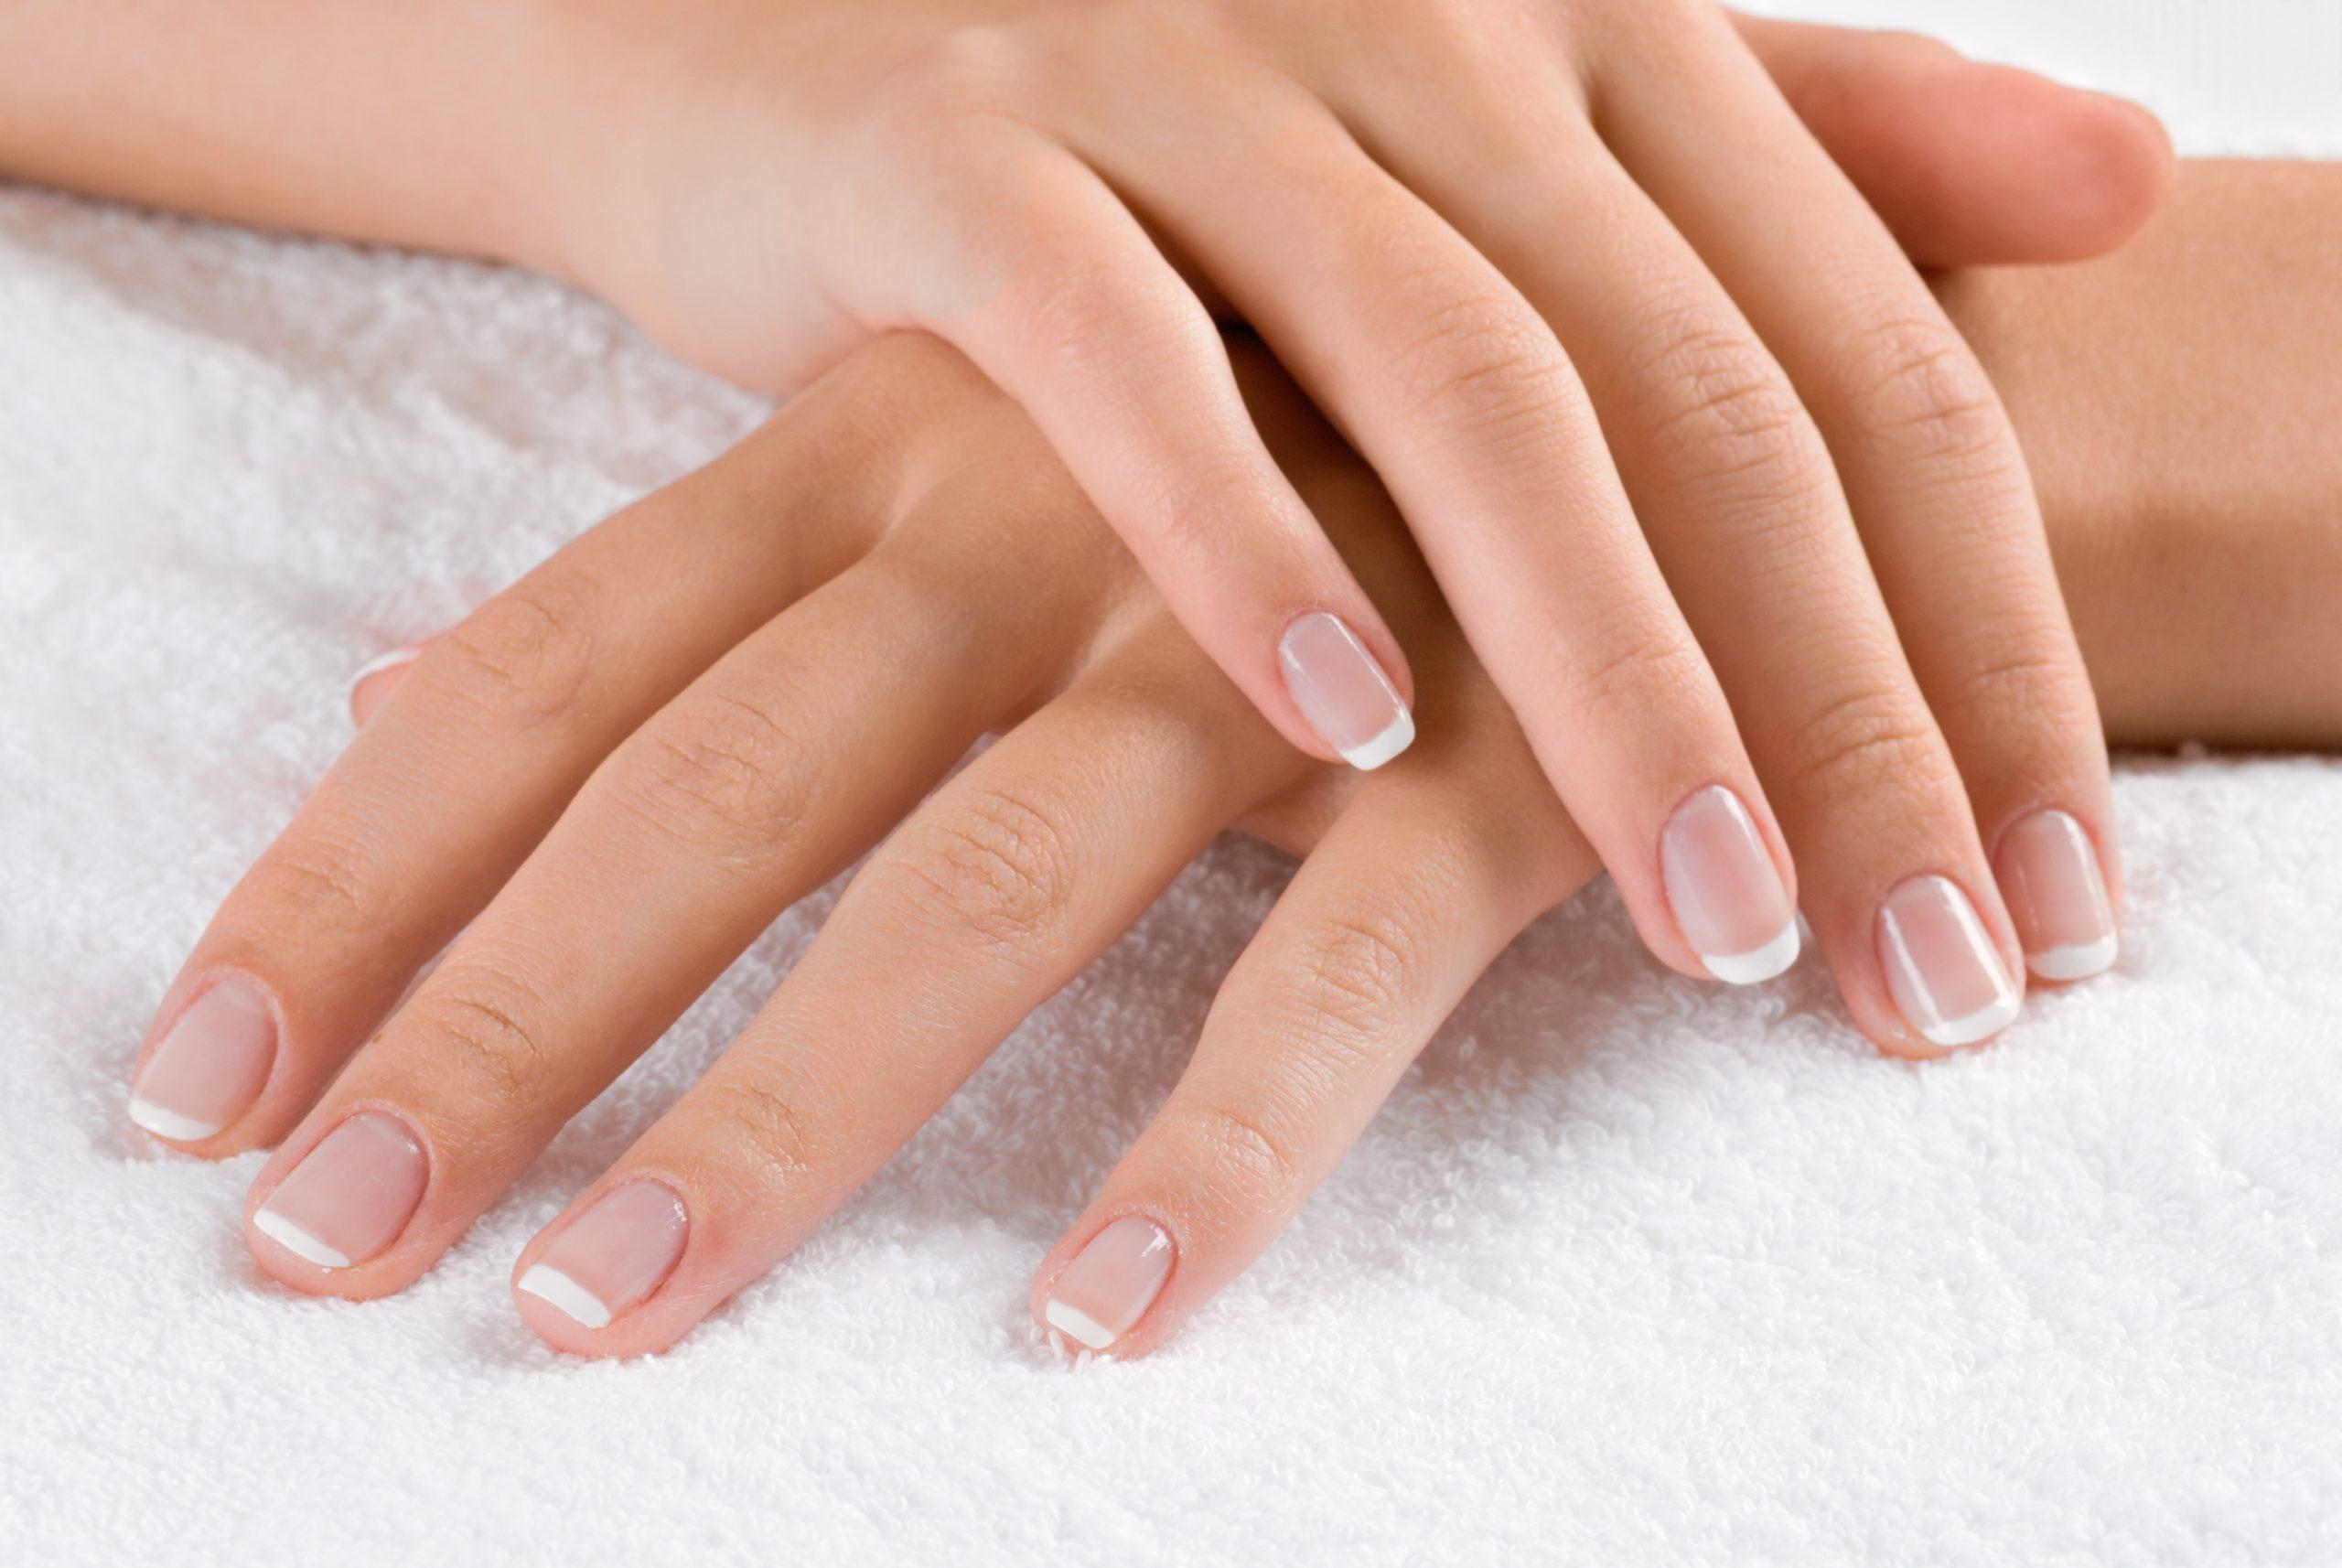 Get regular manicures: